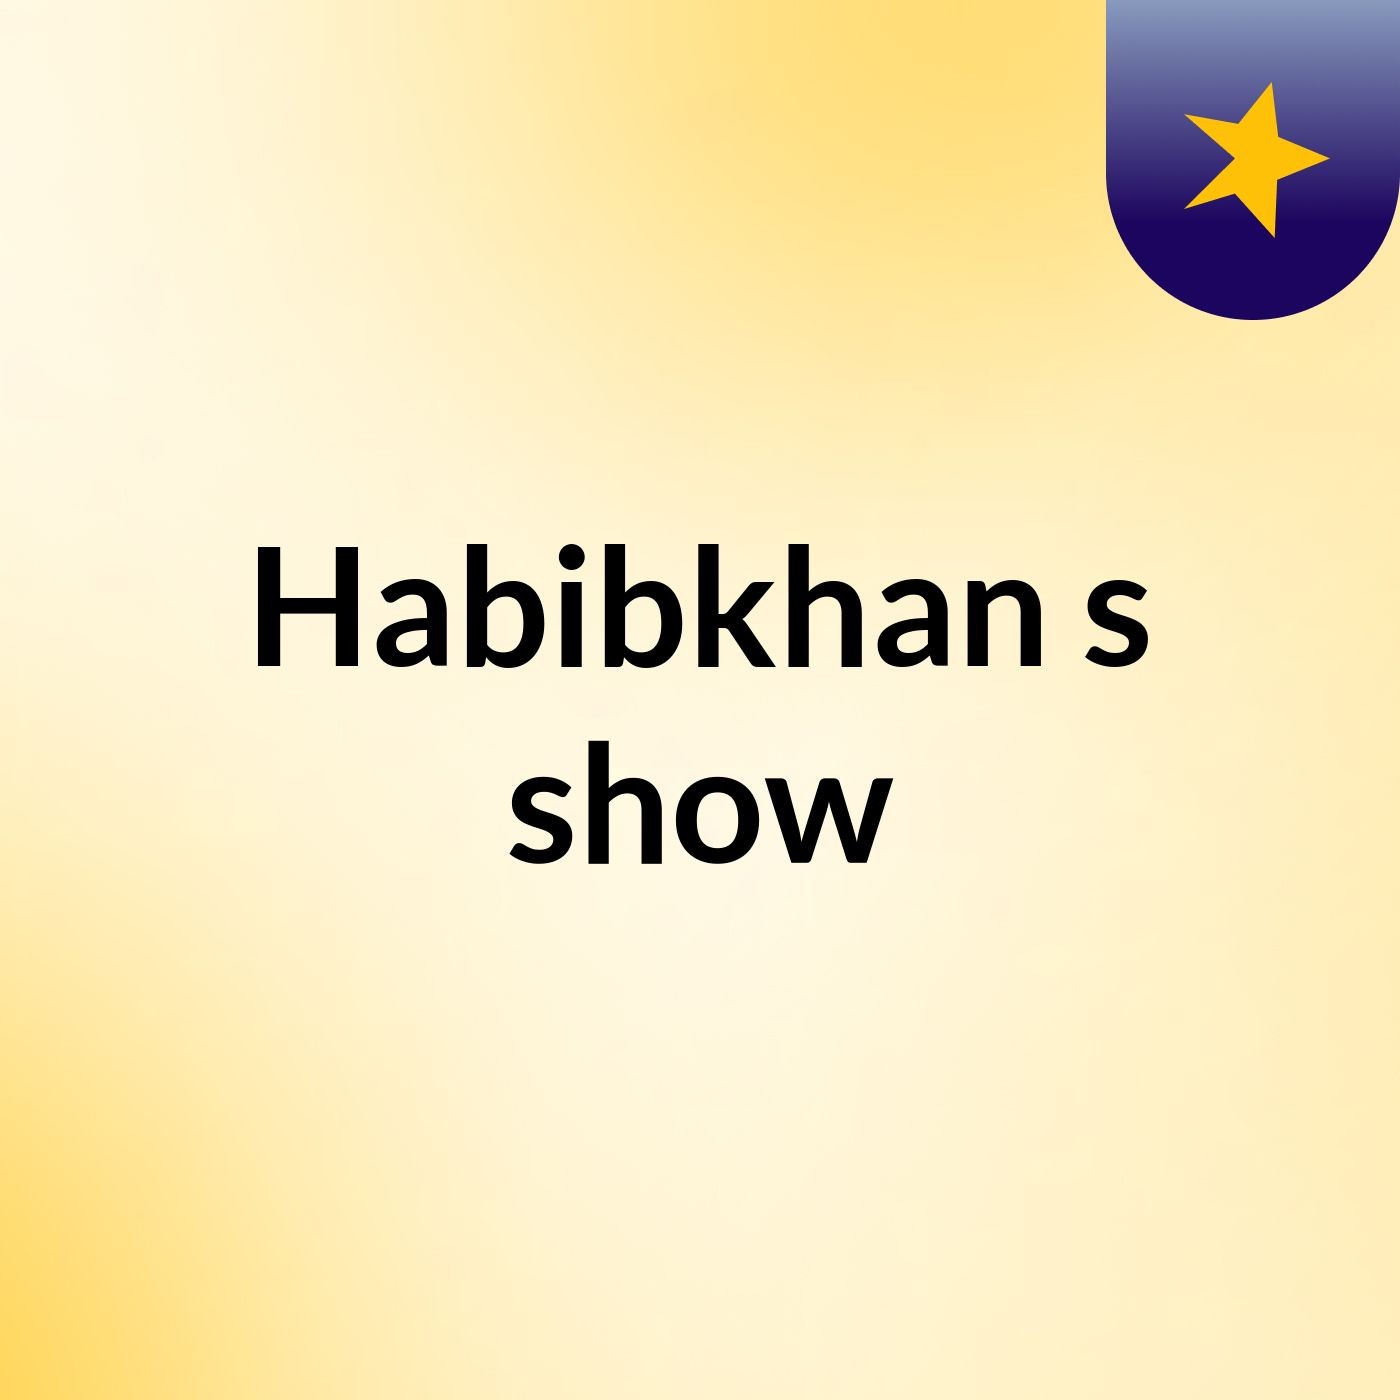 Habibkhan's show